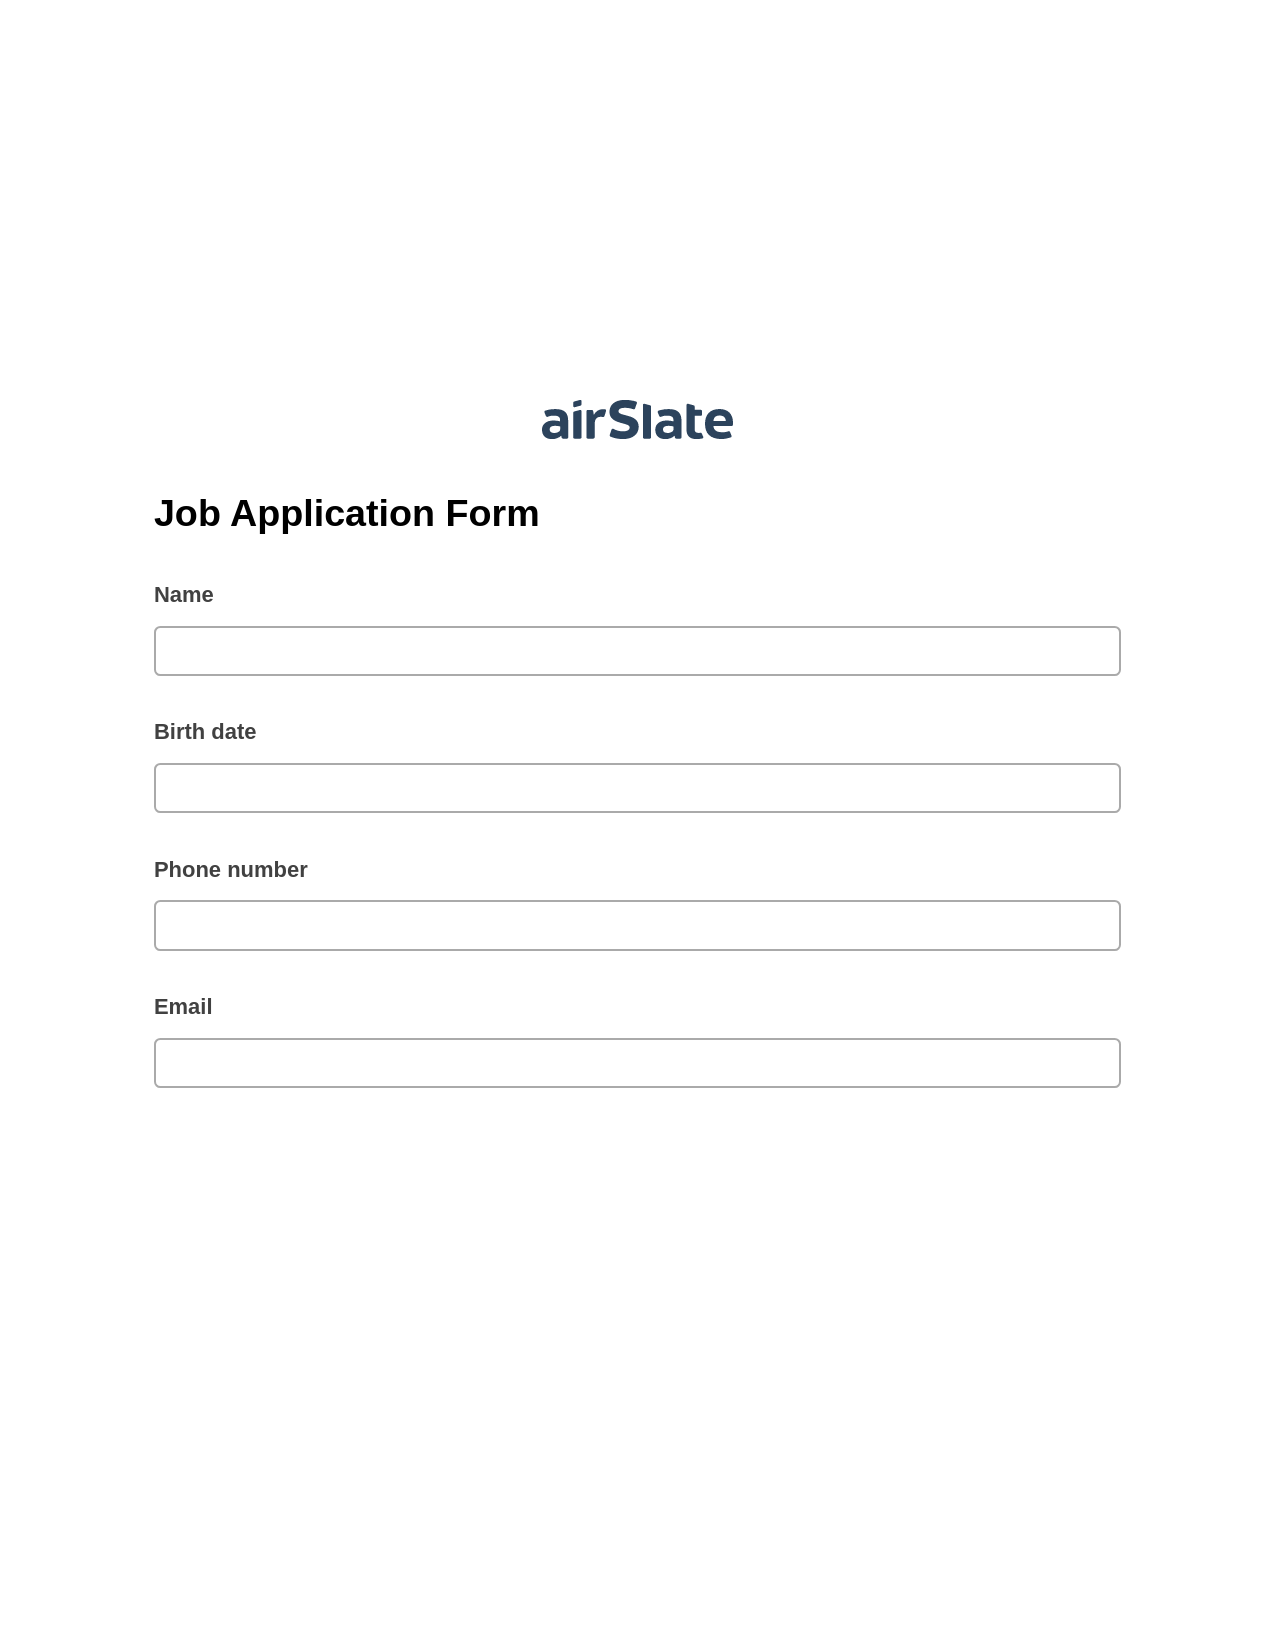 Multirole Job Application Form Pre-fill from CSV File Bot, Mailchimp send Campaign bot, Box Bot